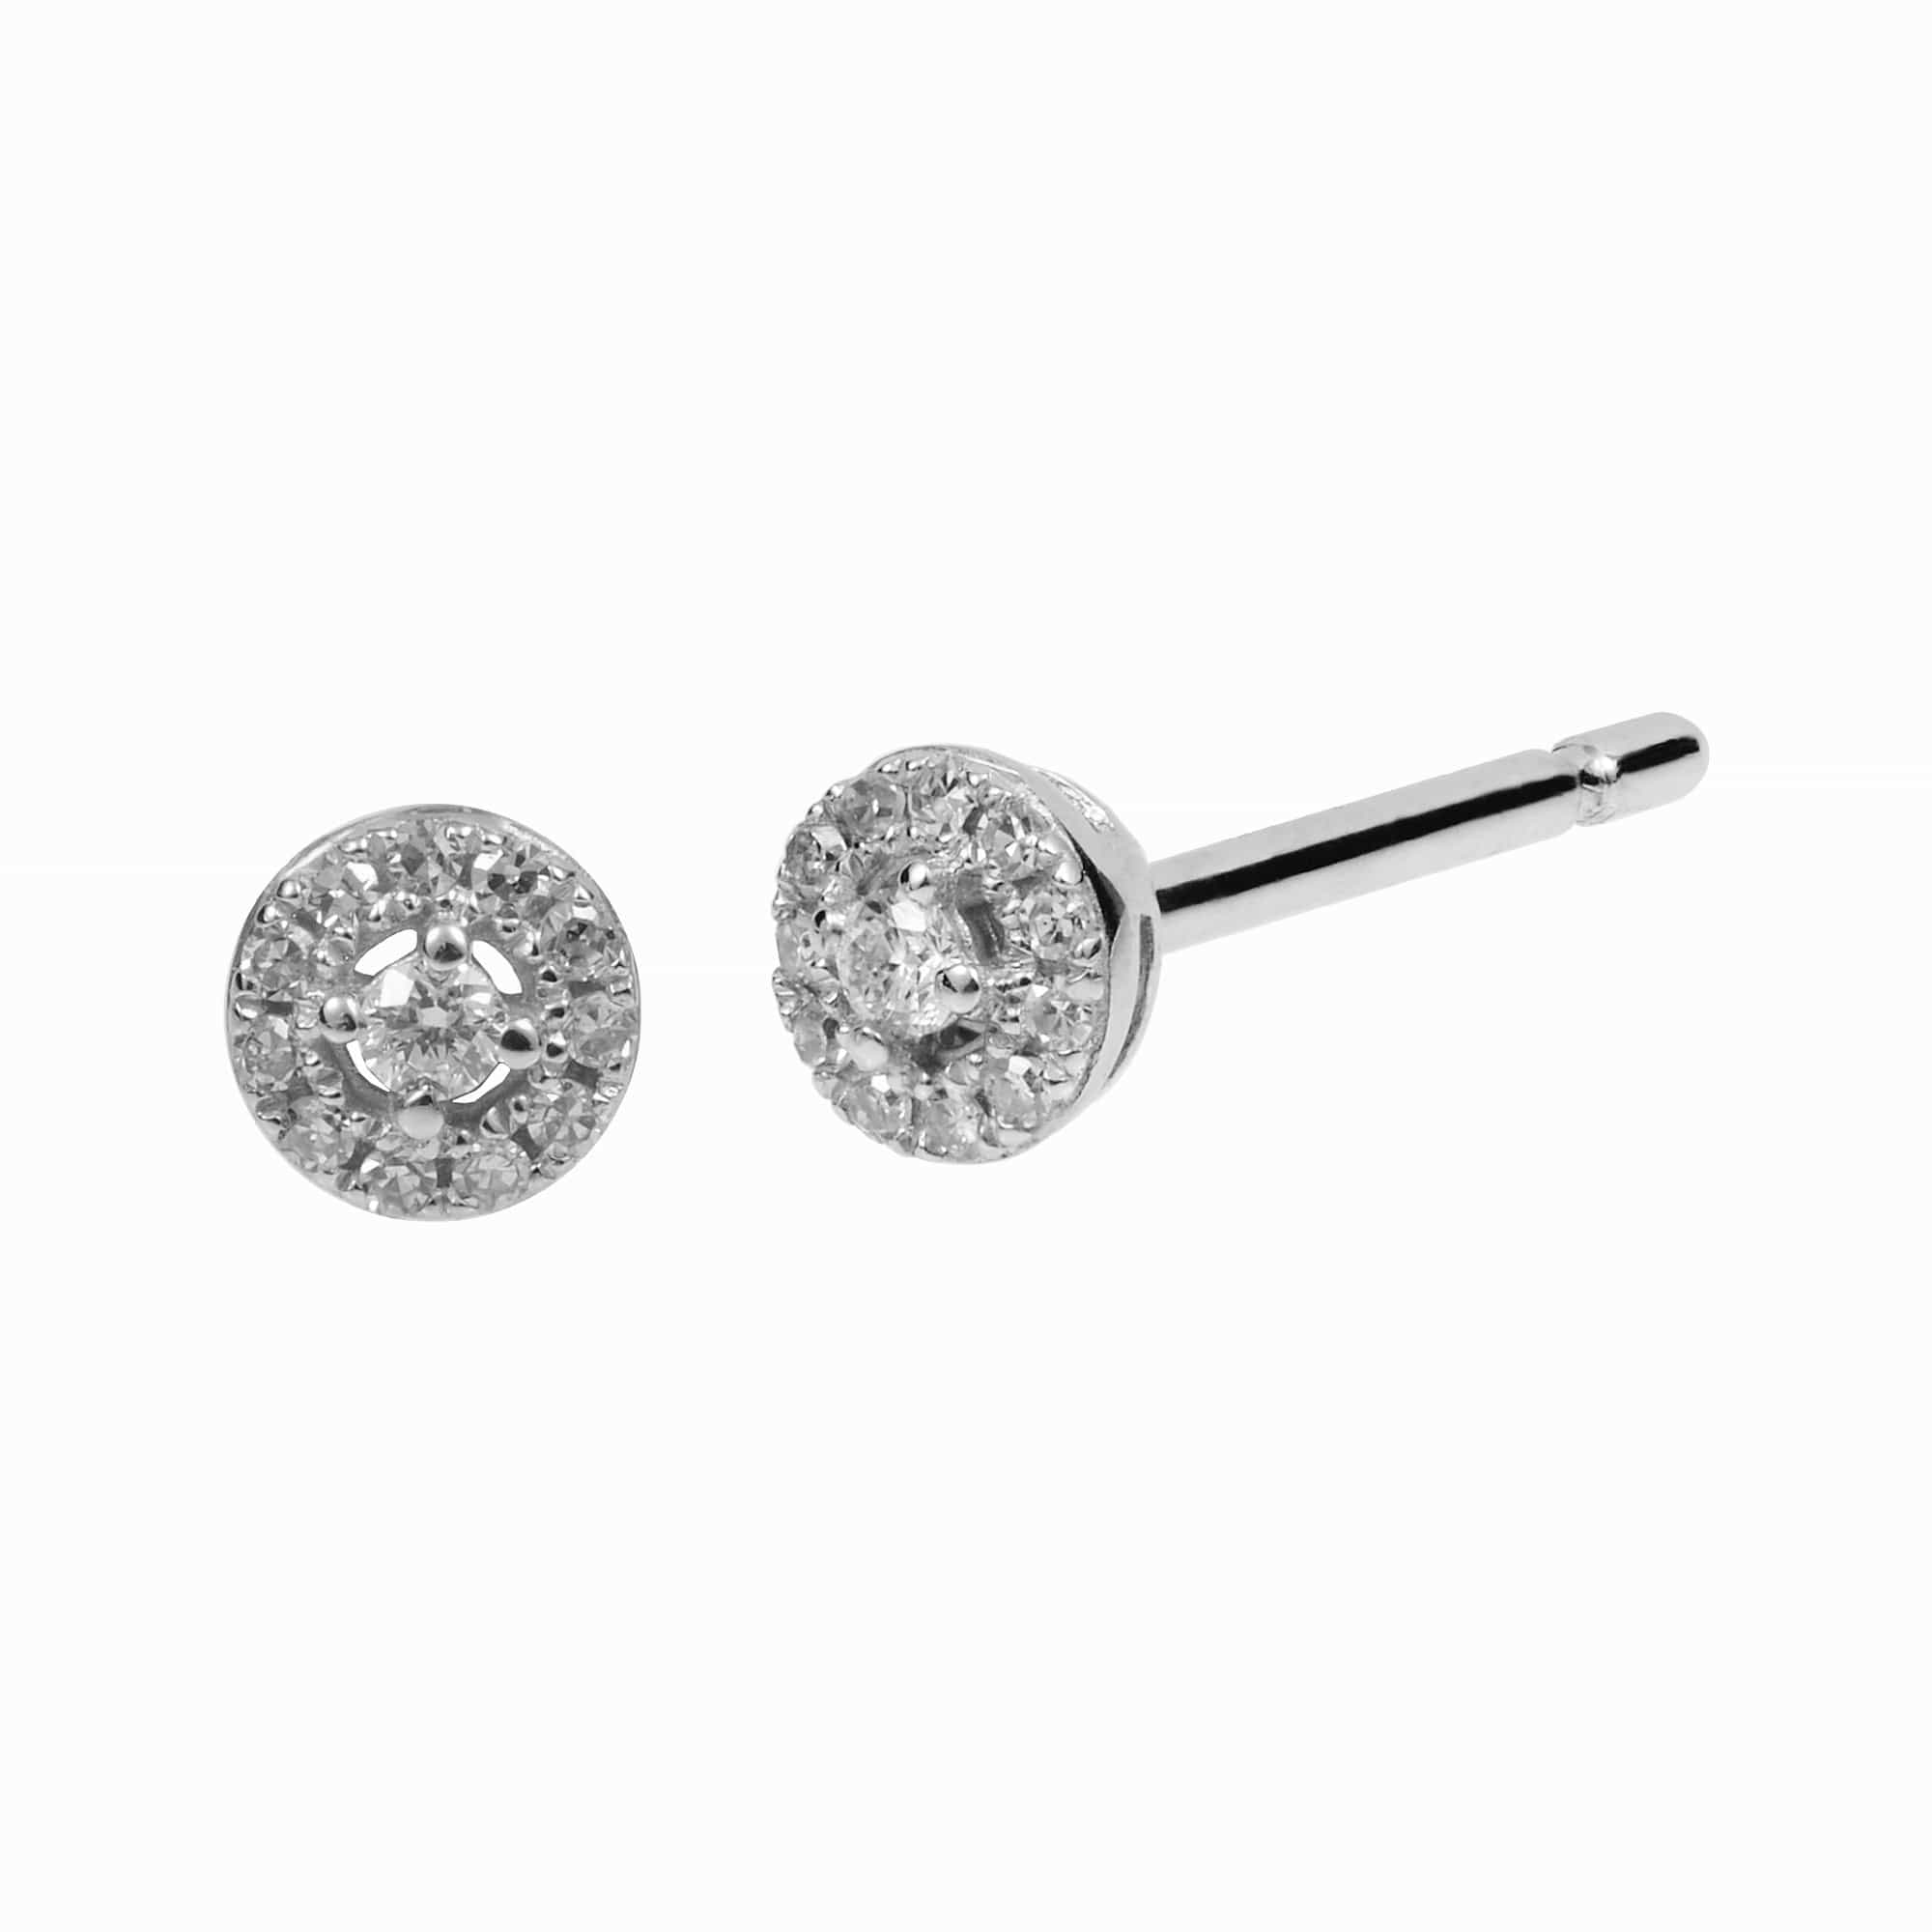 46940E009. Gemondo Women 9ct White Gold Round Diamond 3.5mm Cluster Stud Earrings 1